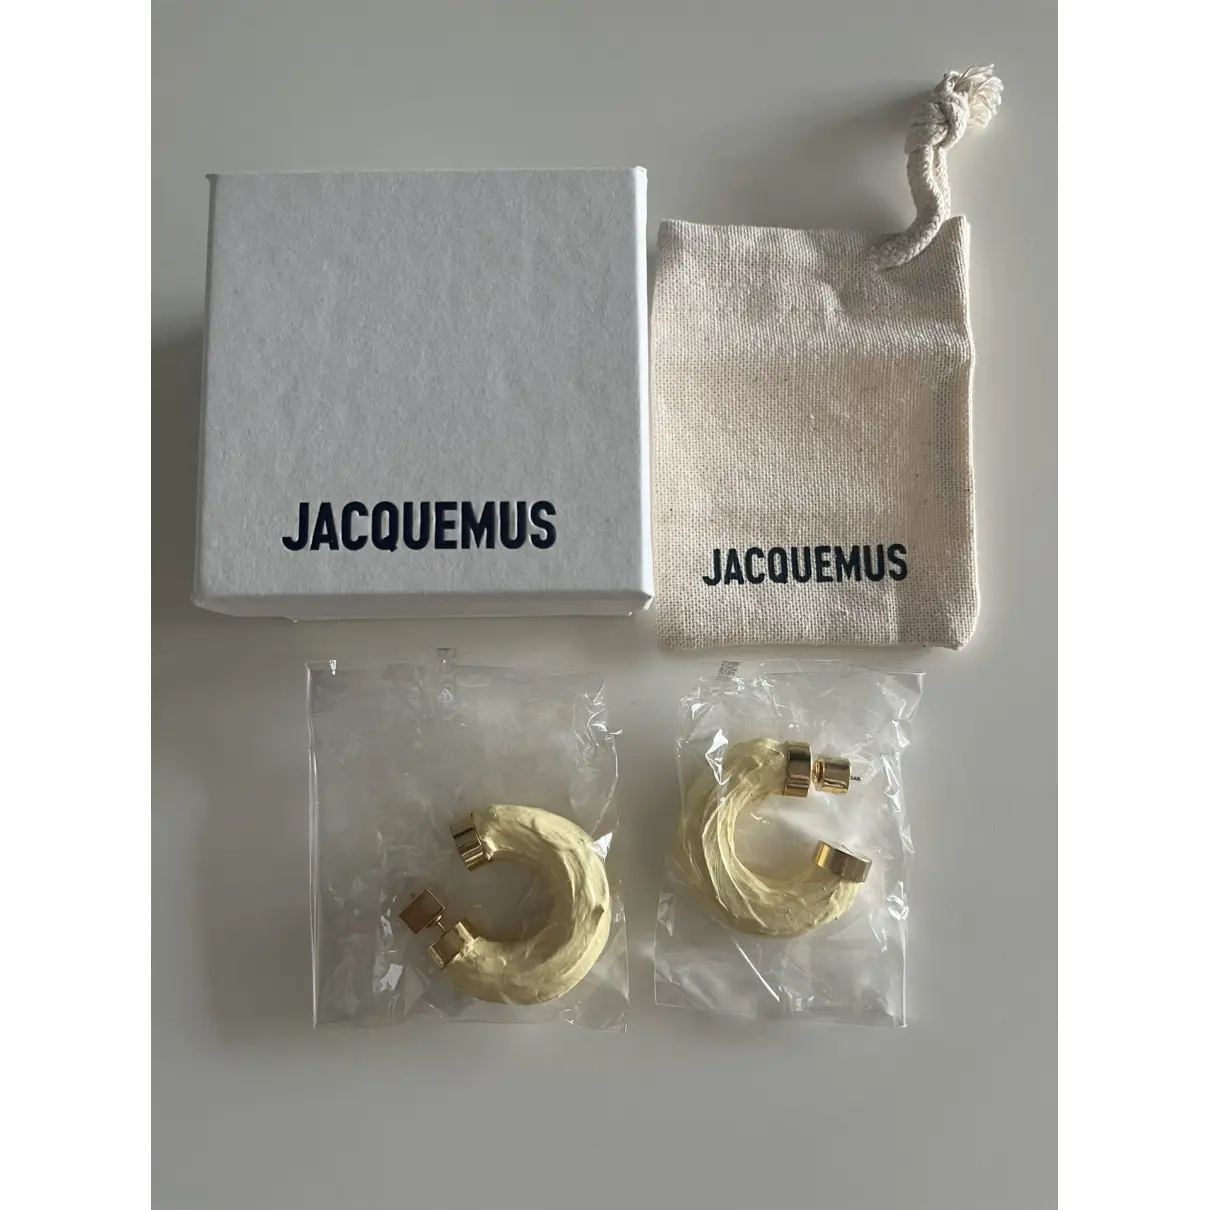 Les Creoles Brila earrings Jacquemus